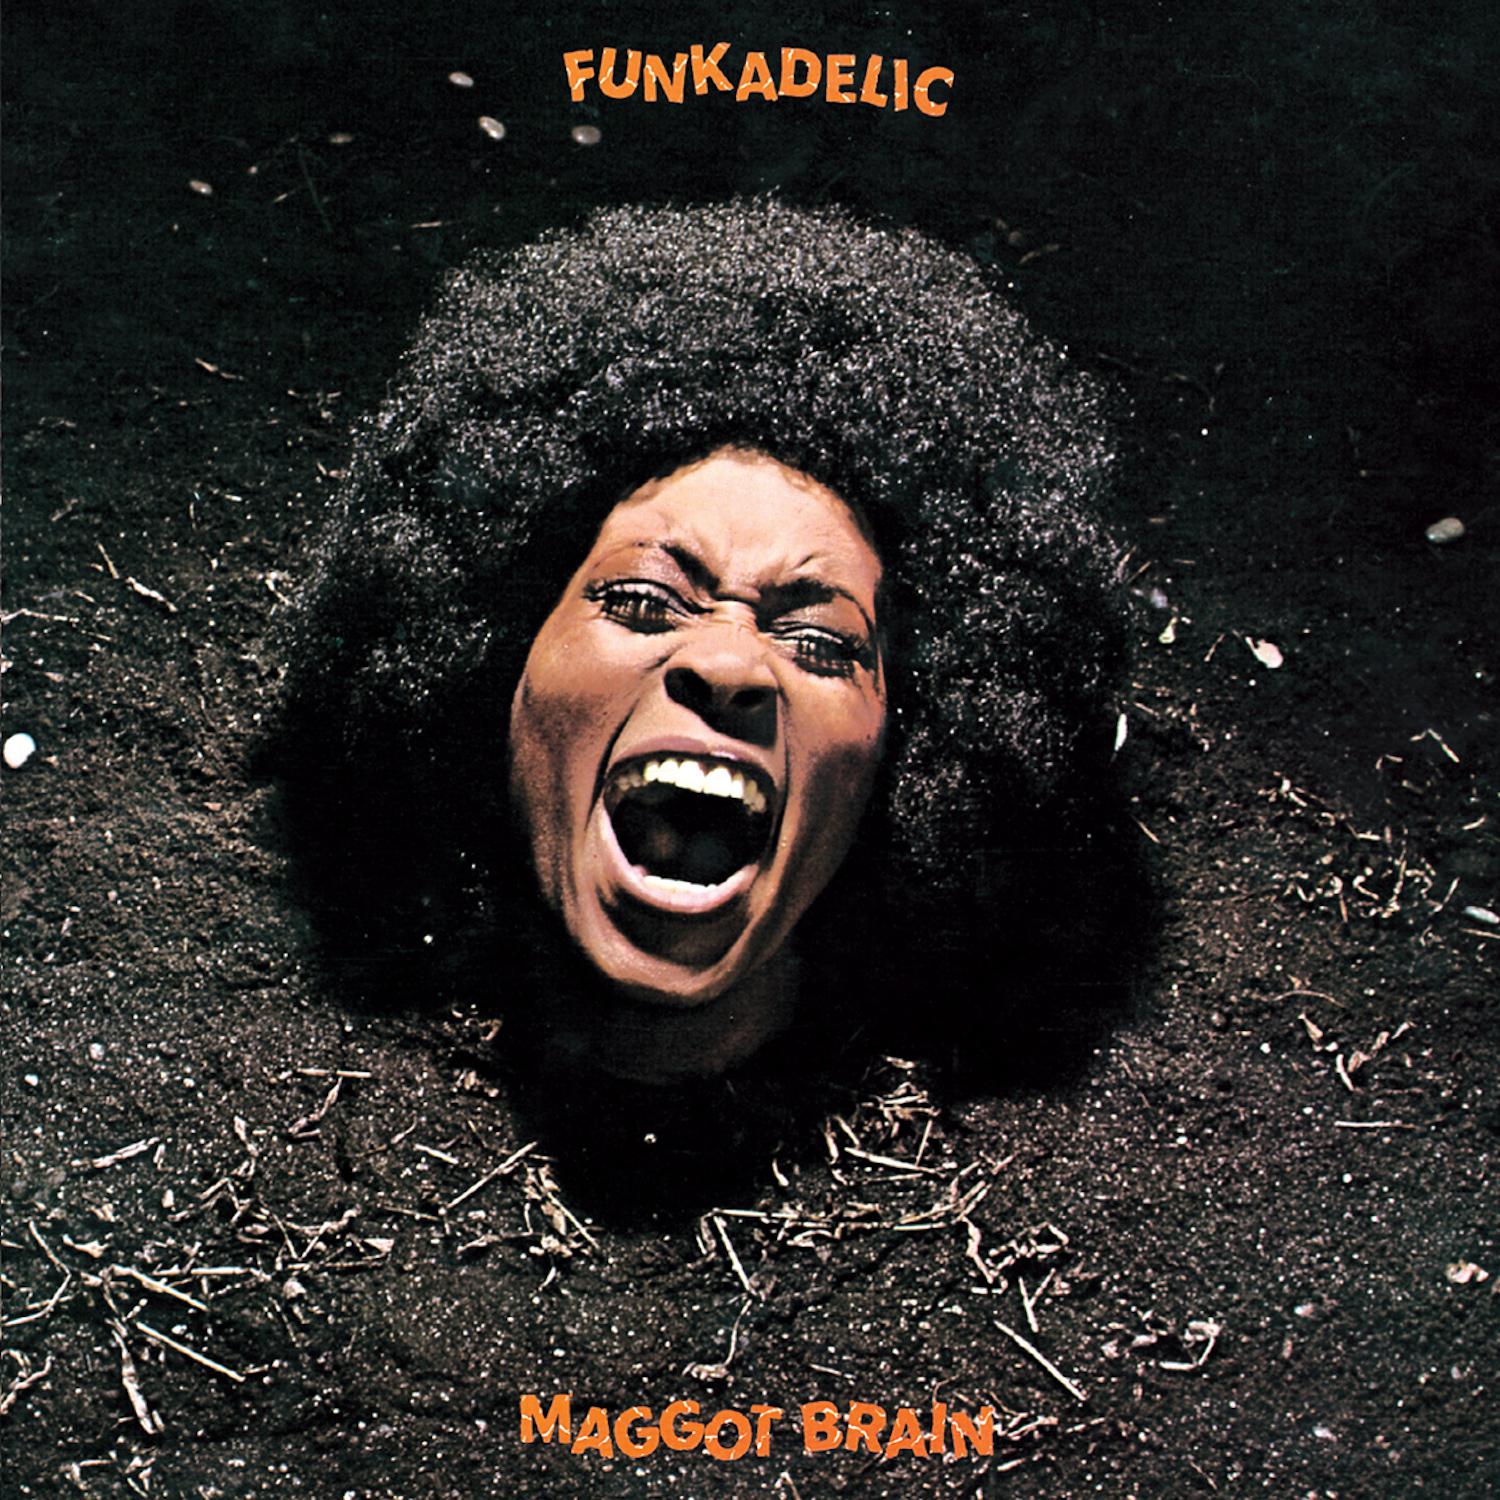 Wars of Armageddon歌词 歌手Funkadelic-专辑Maggot Brain-单曲《Wars of Armageddon》LRC歌词下载